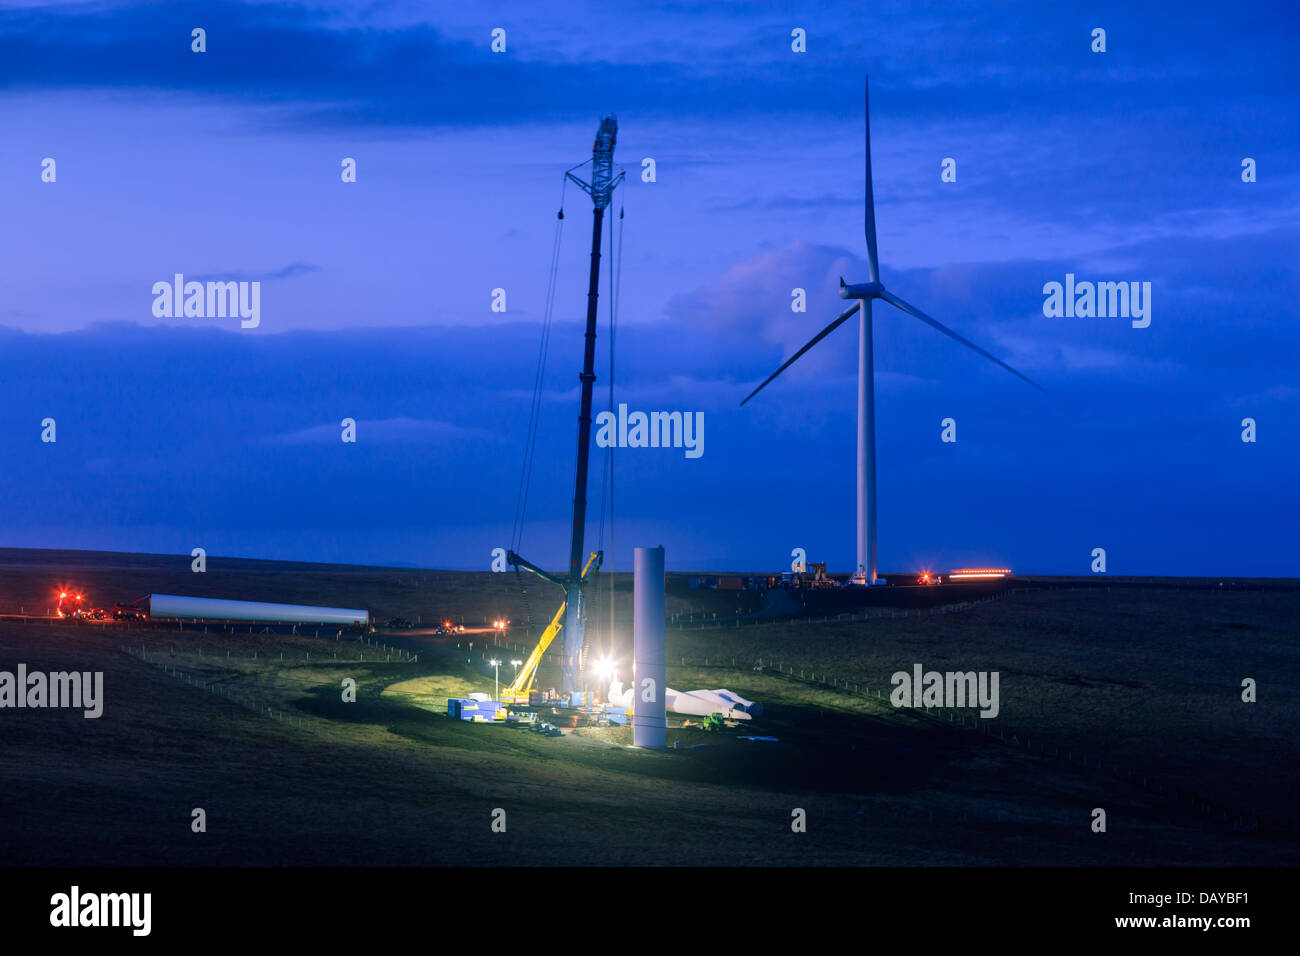 Constructing a Wind Turbine at night Stock Photo